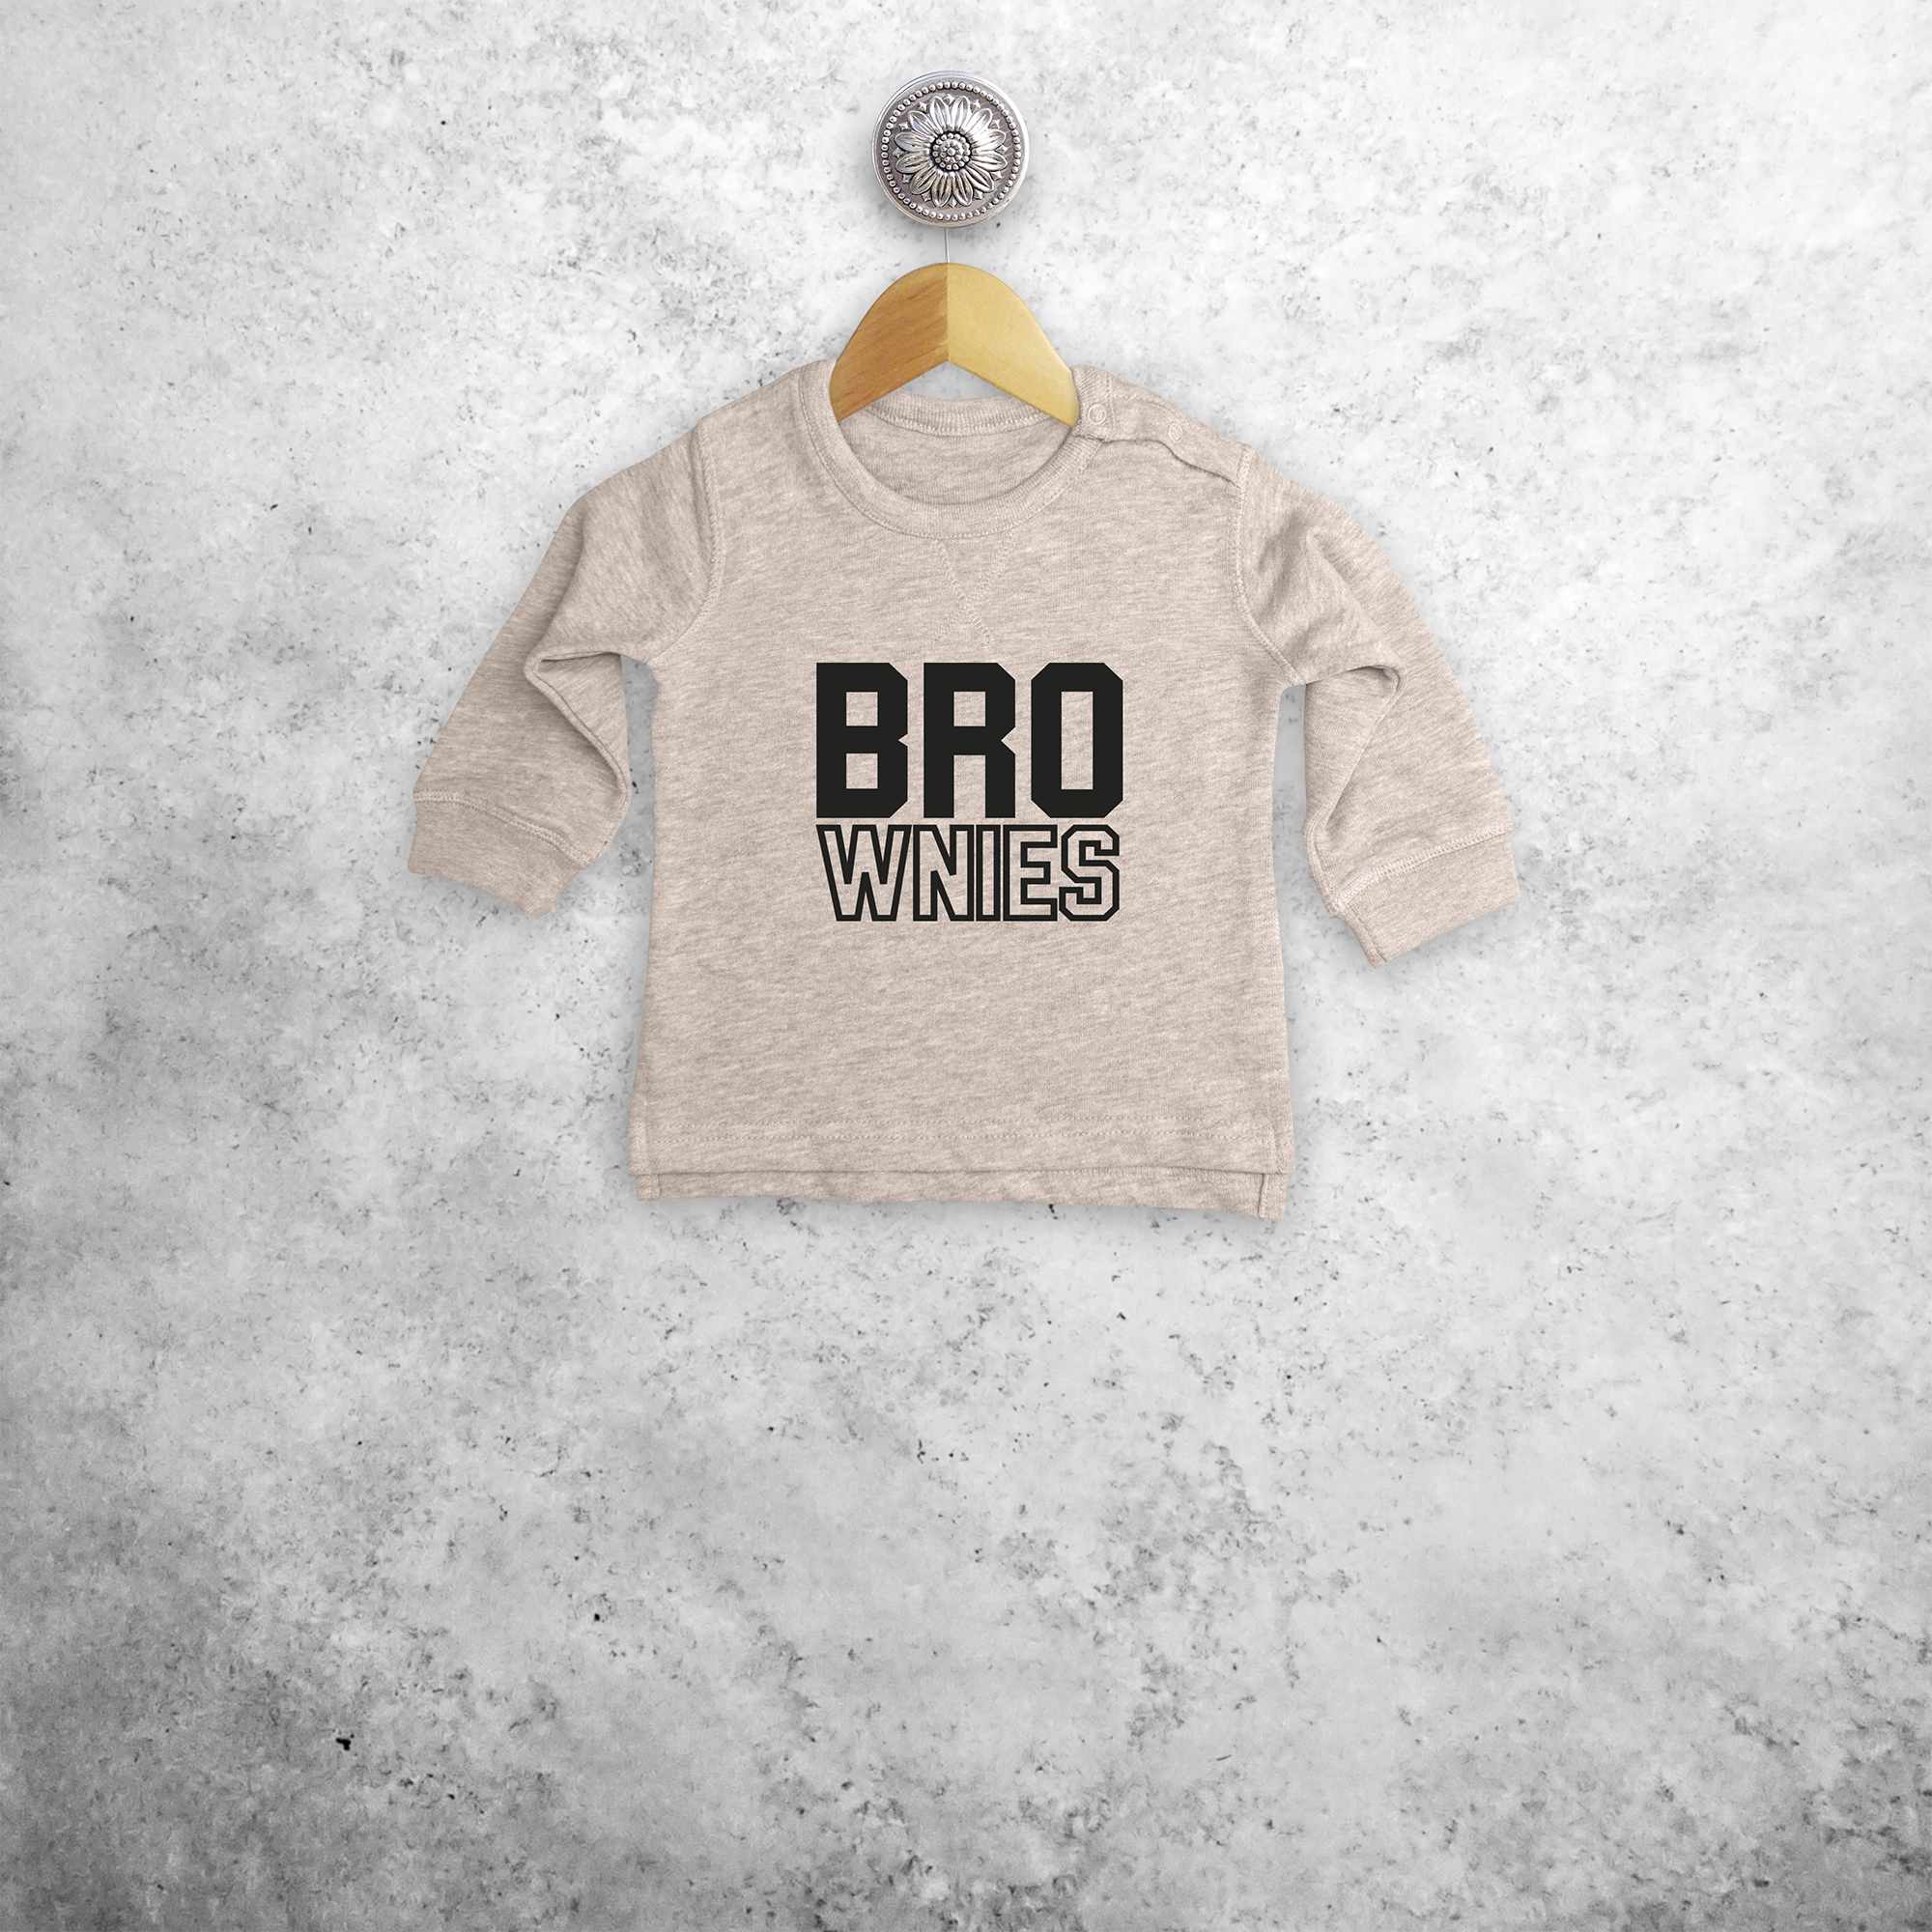 'Bro-wnies' baby sweater